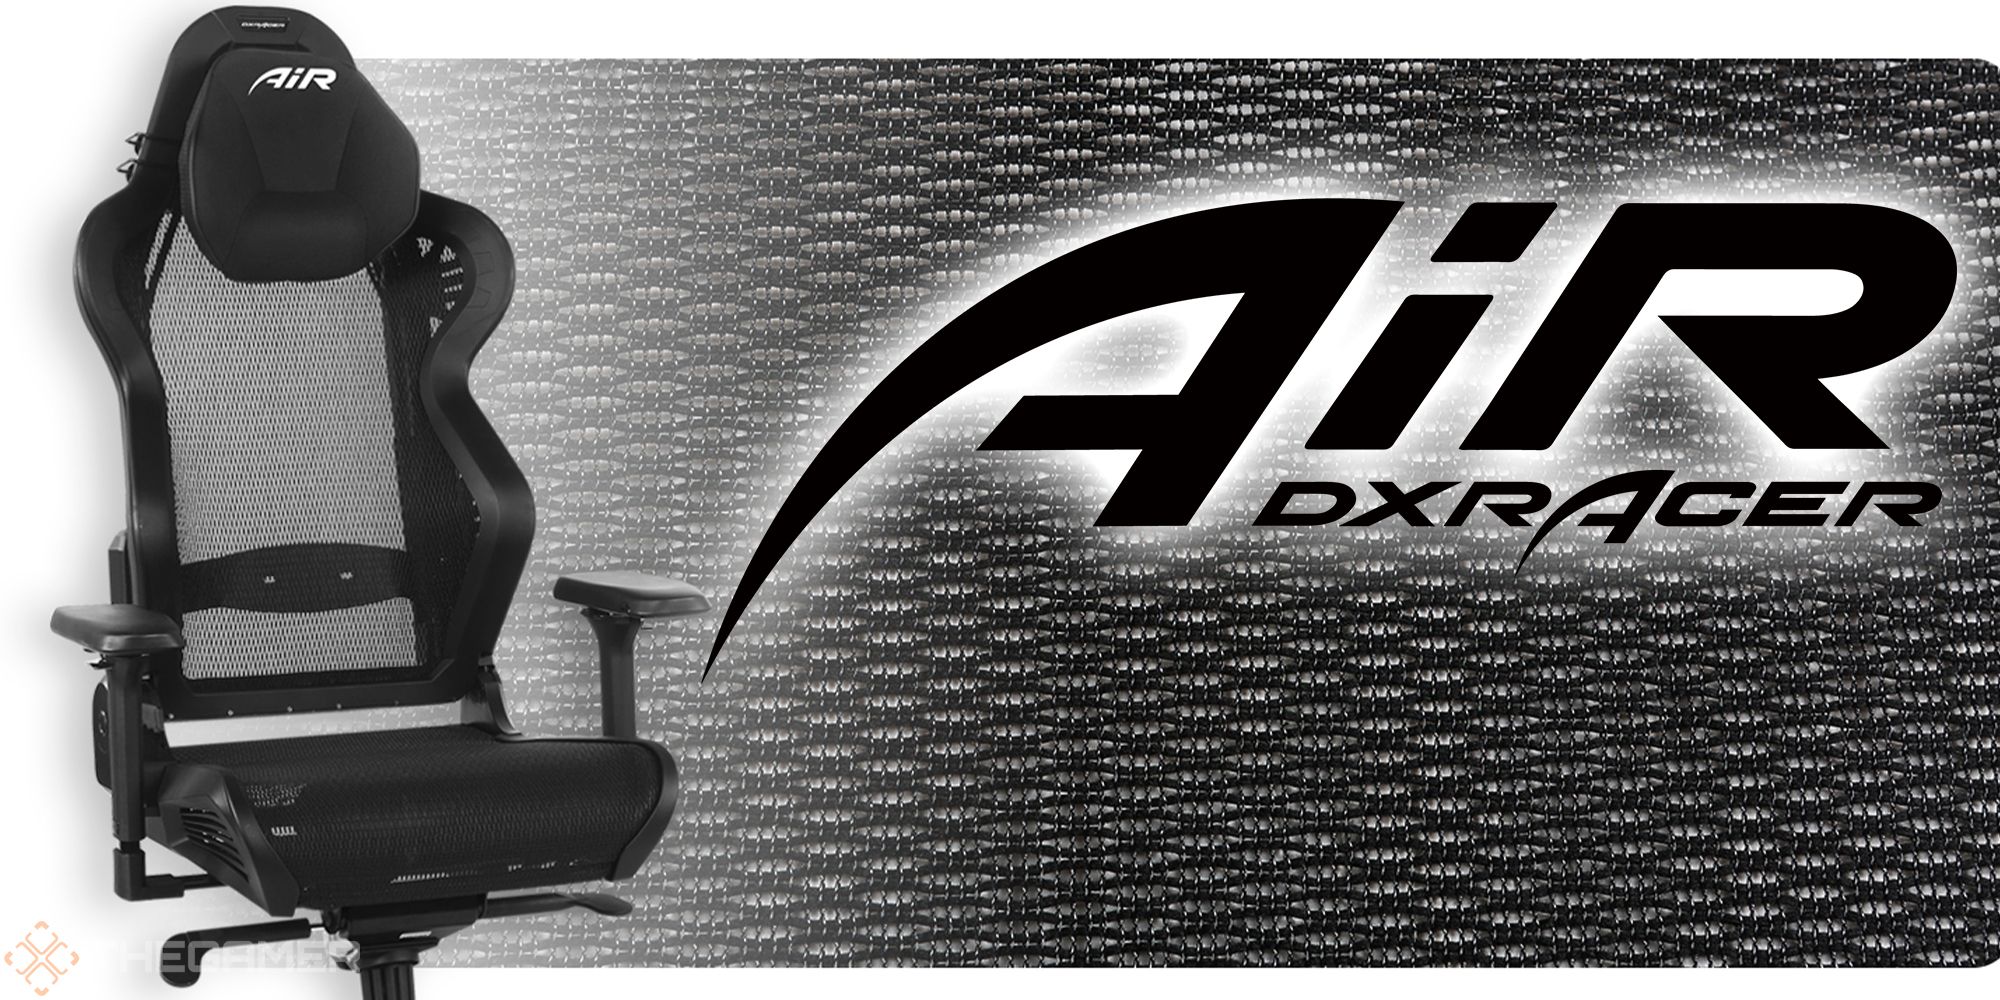 DXRacer Air Hed